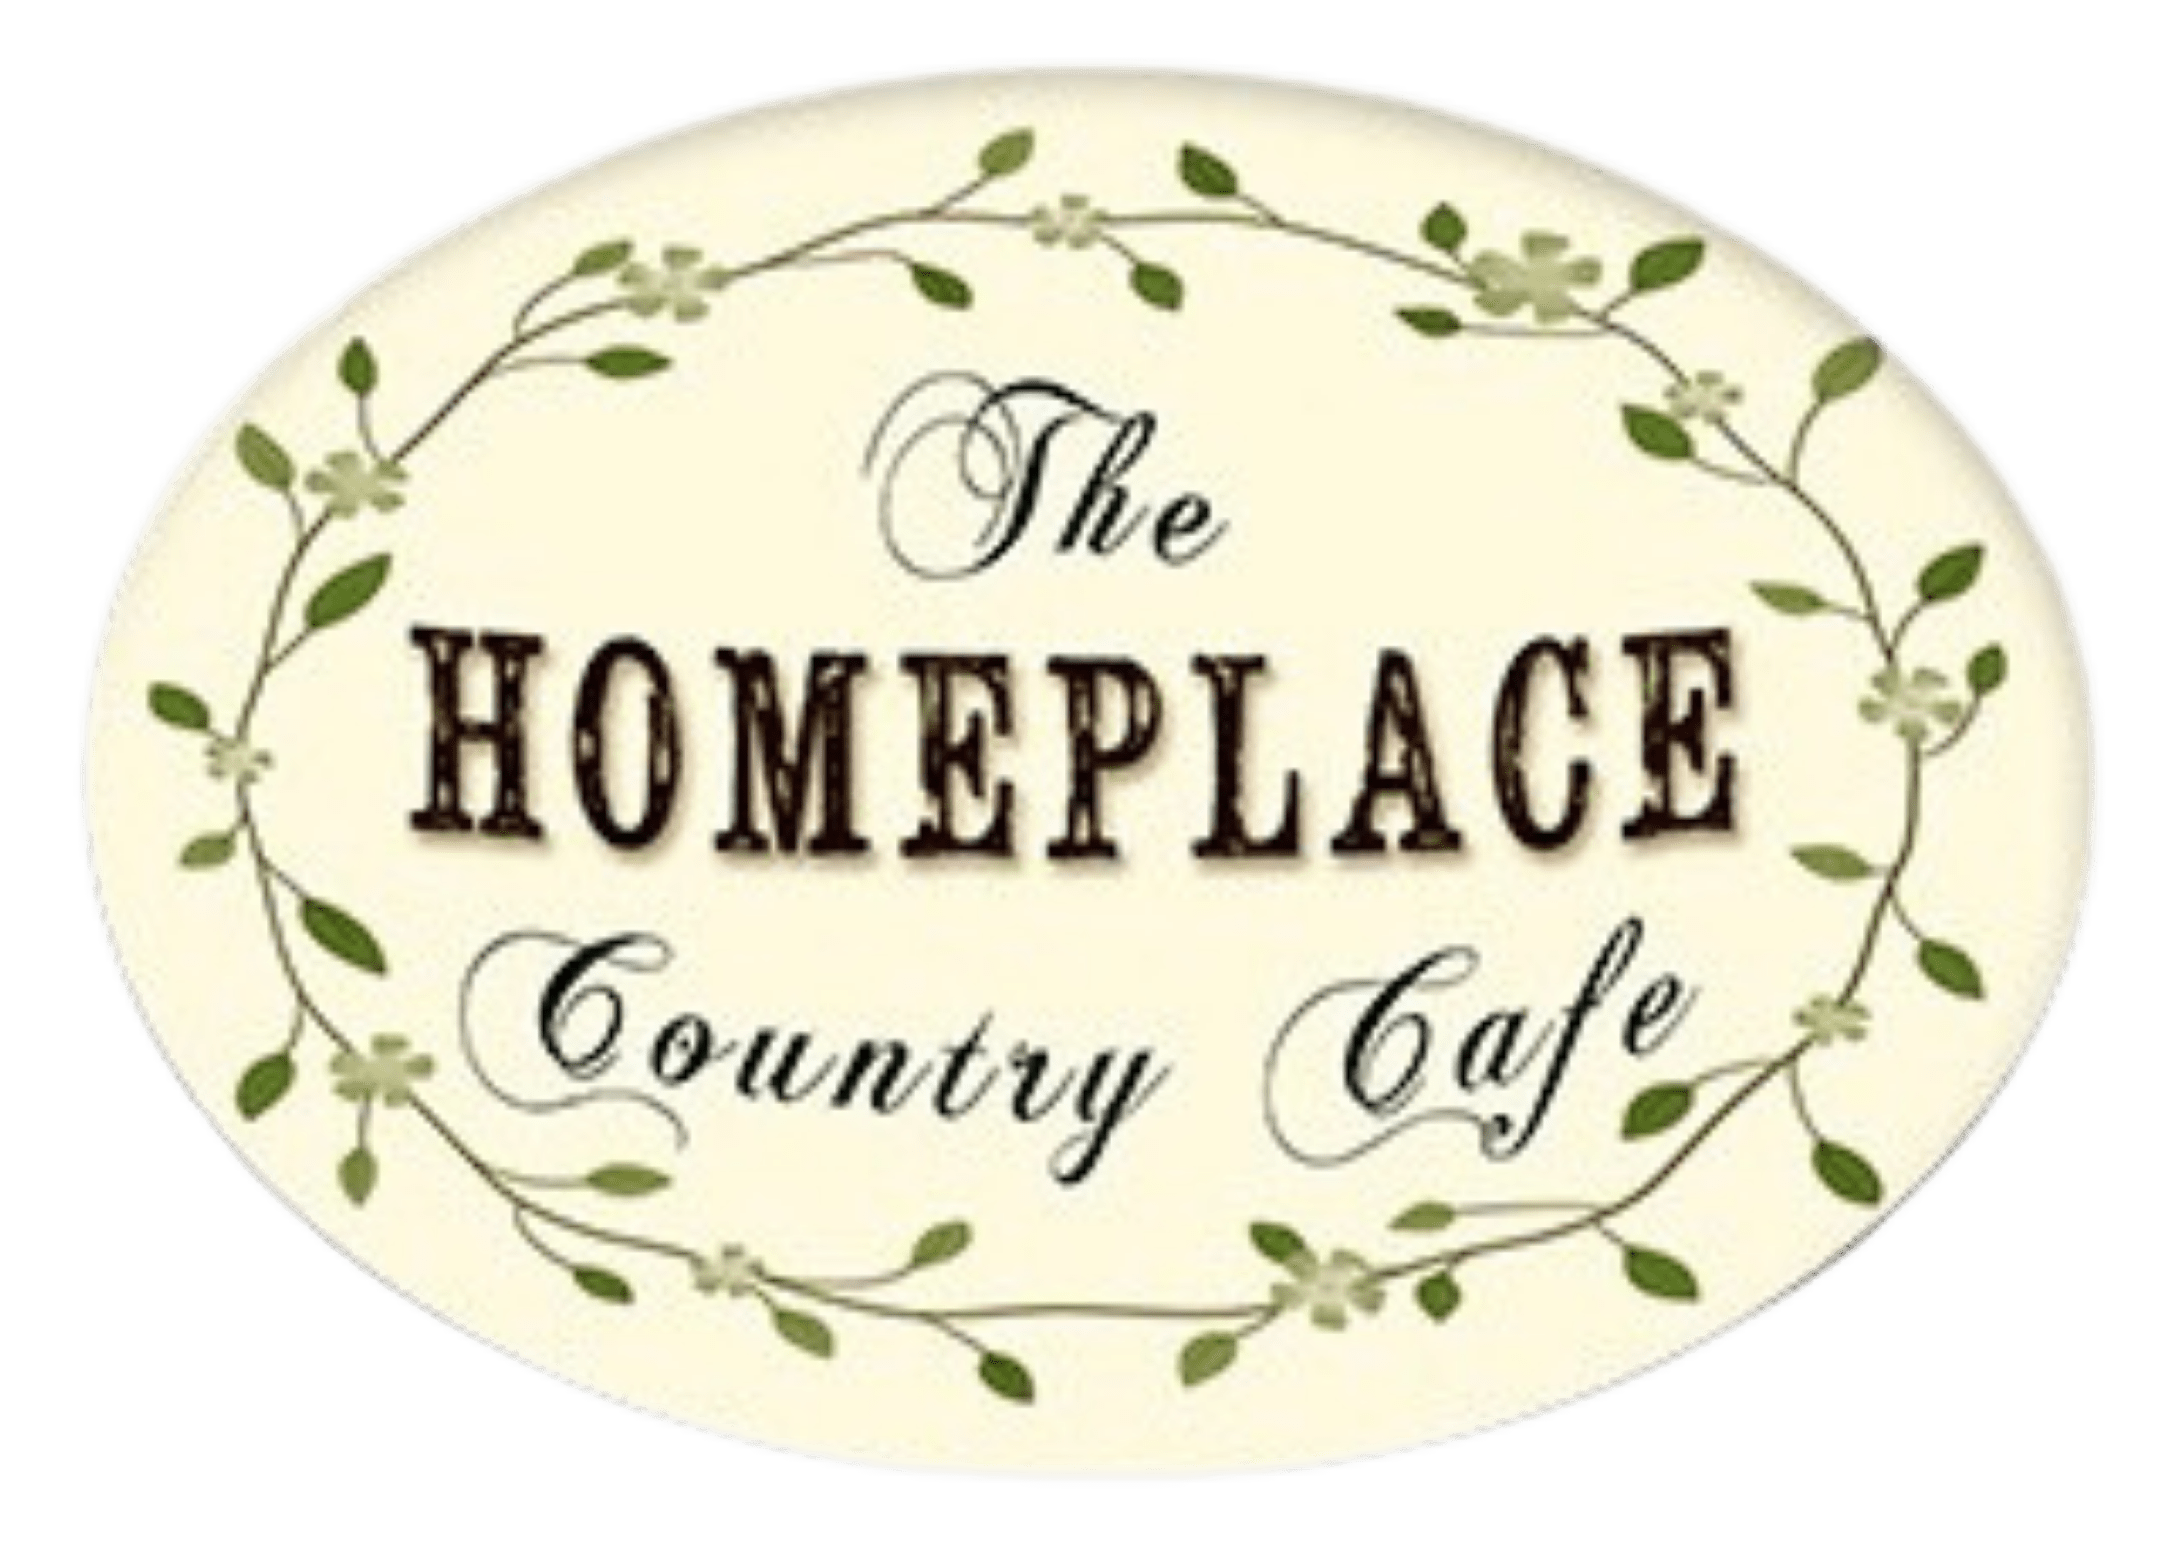 The Homeplace Café